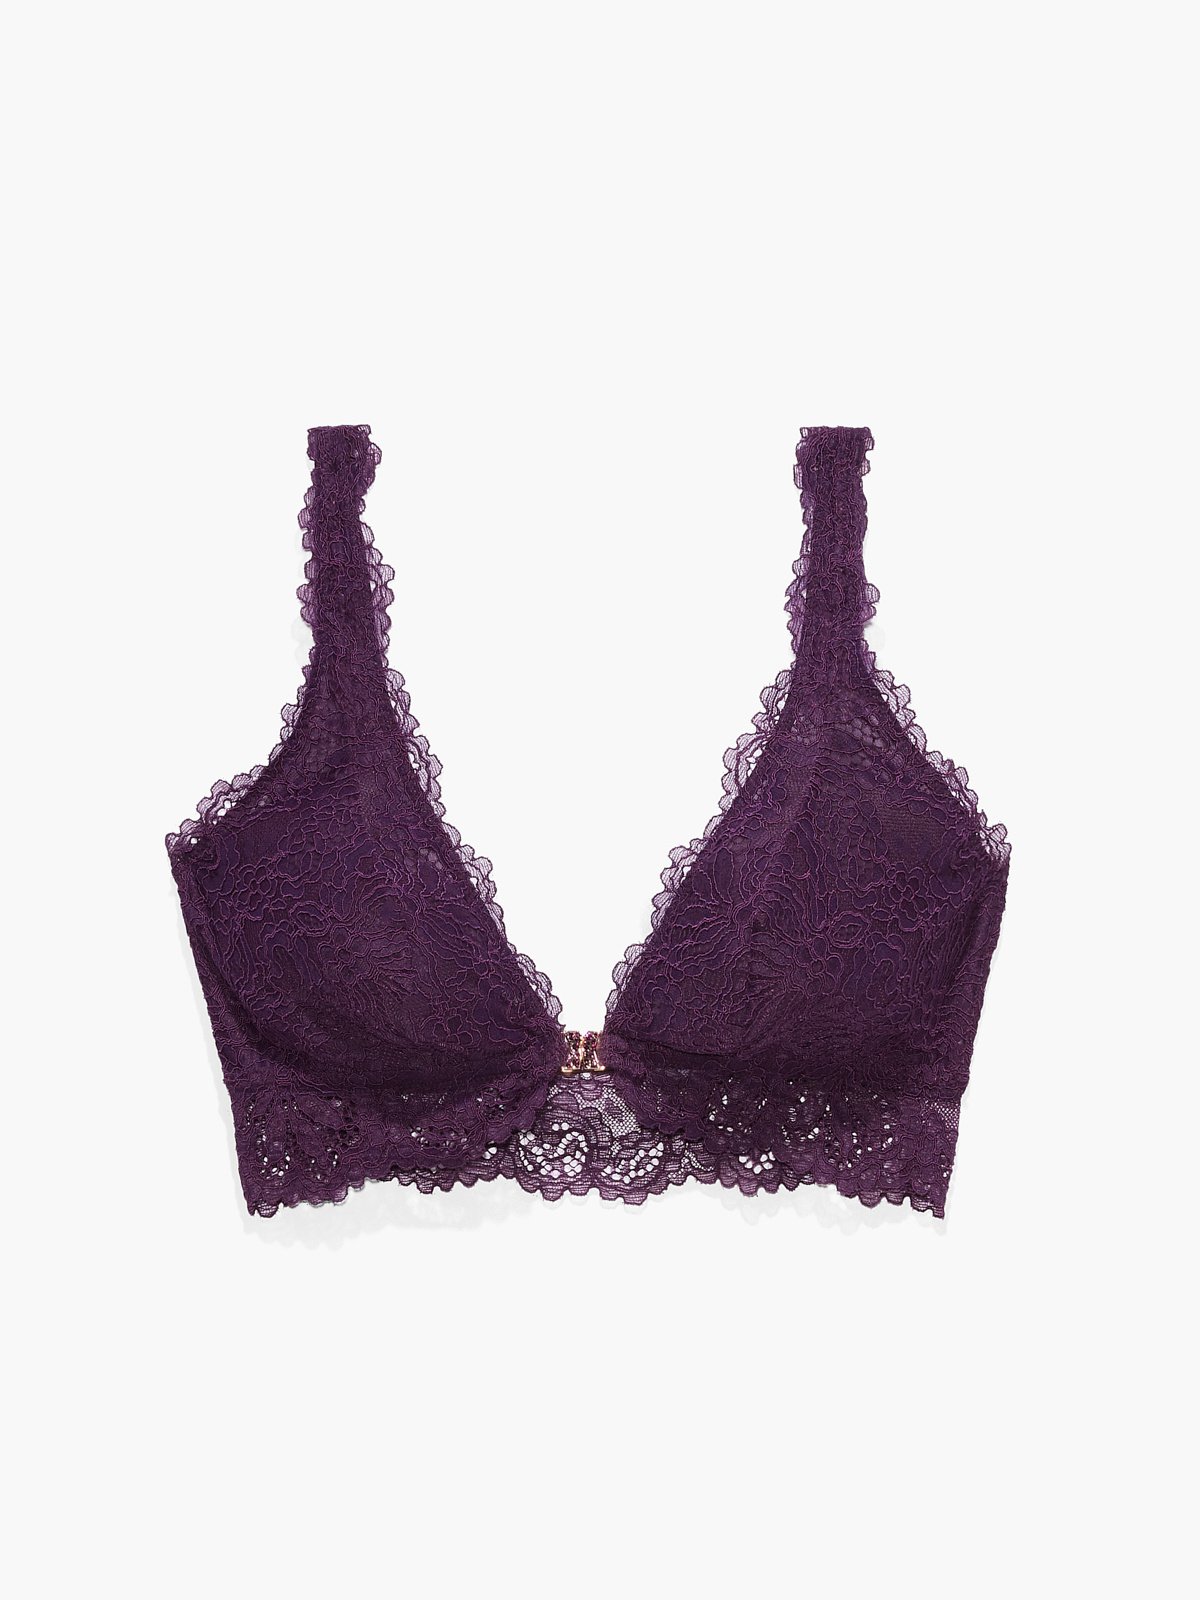 Romantic Corded Lace Front-Closure Bralette in Purple